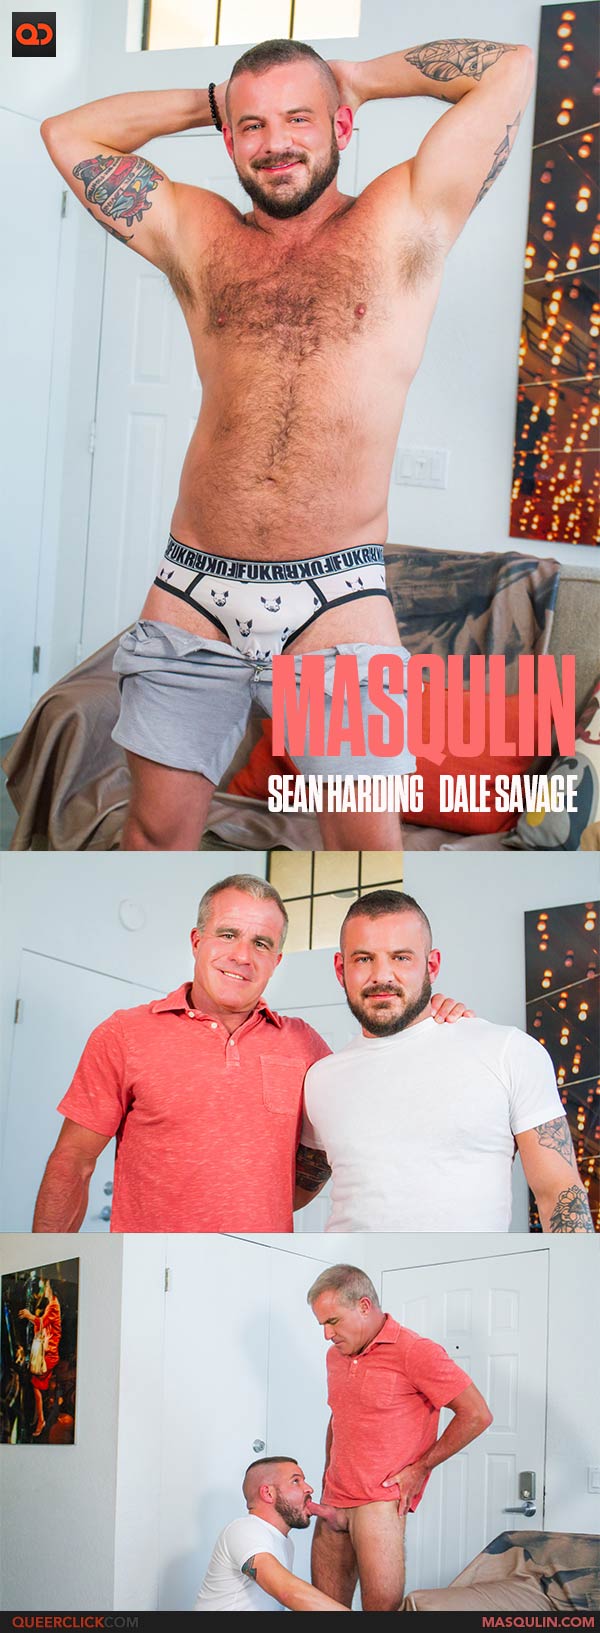 Masqulin: Dale Savage and Sean Harding